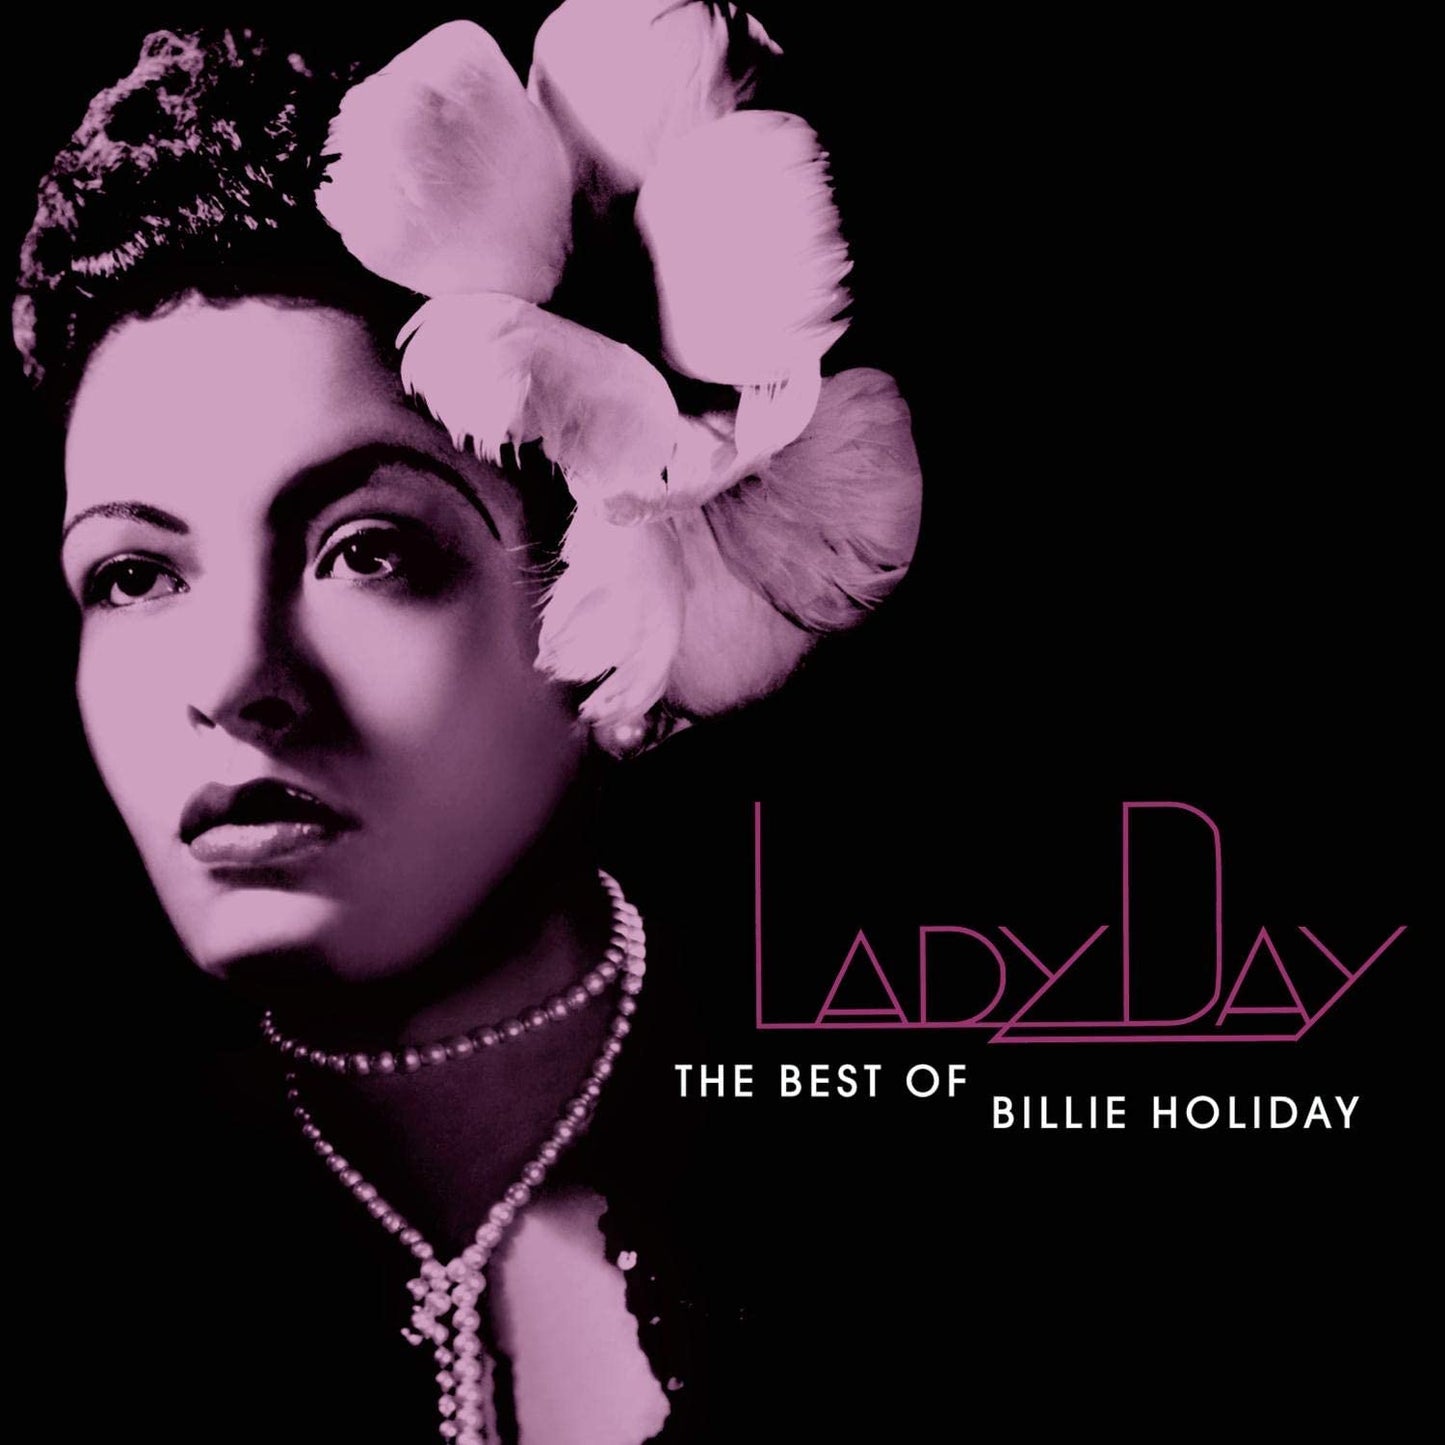 Billie Holiday - Lady Day - 2CD